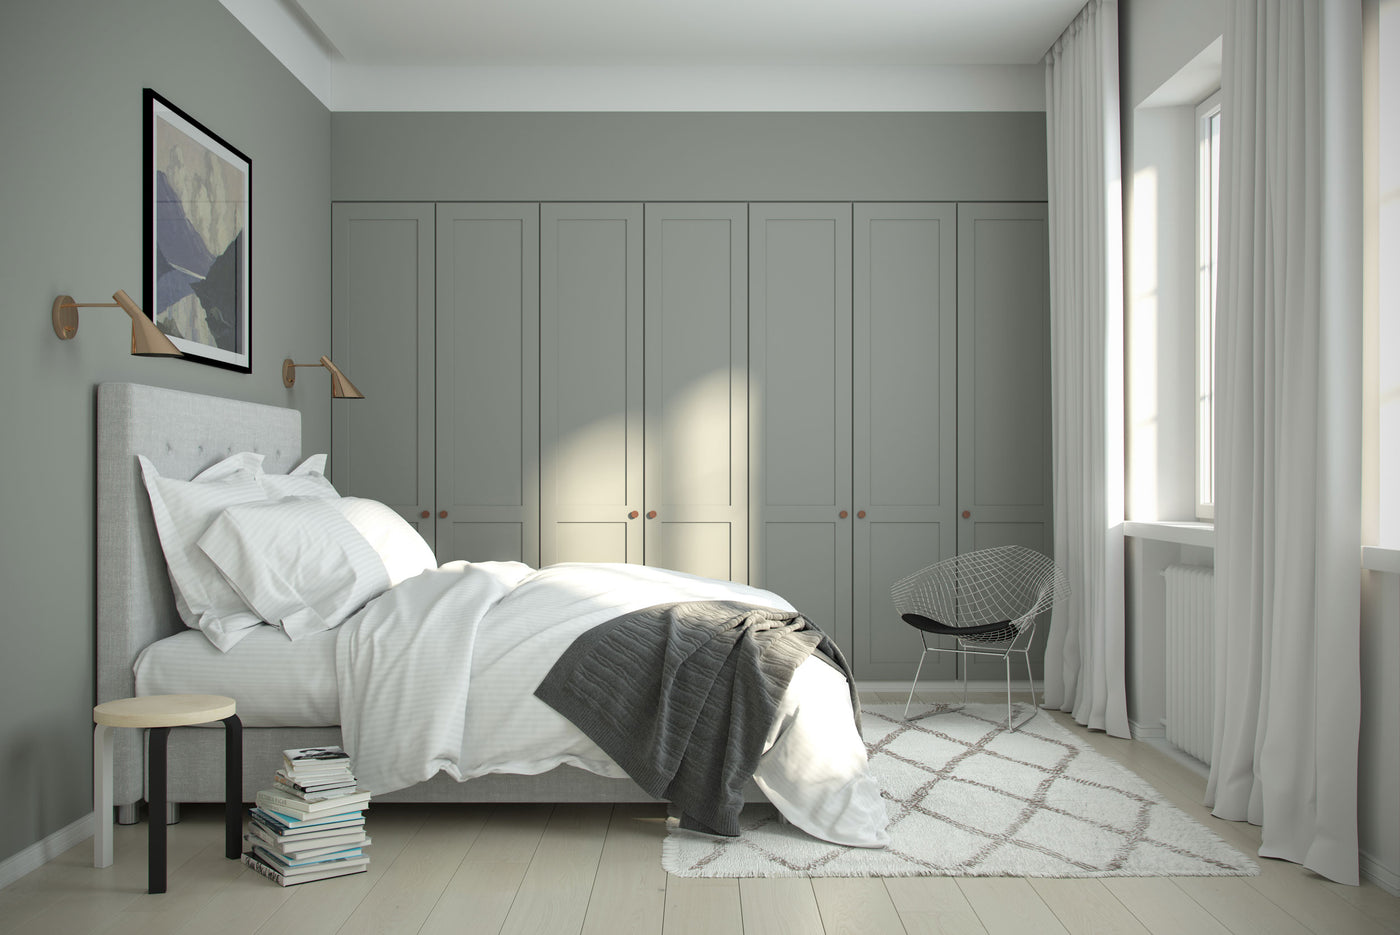 A.S.Helsingö Ensiö built-in wardrobe in thermal grey color in bedroom with copper Parasol handles